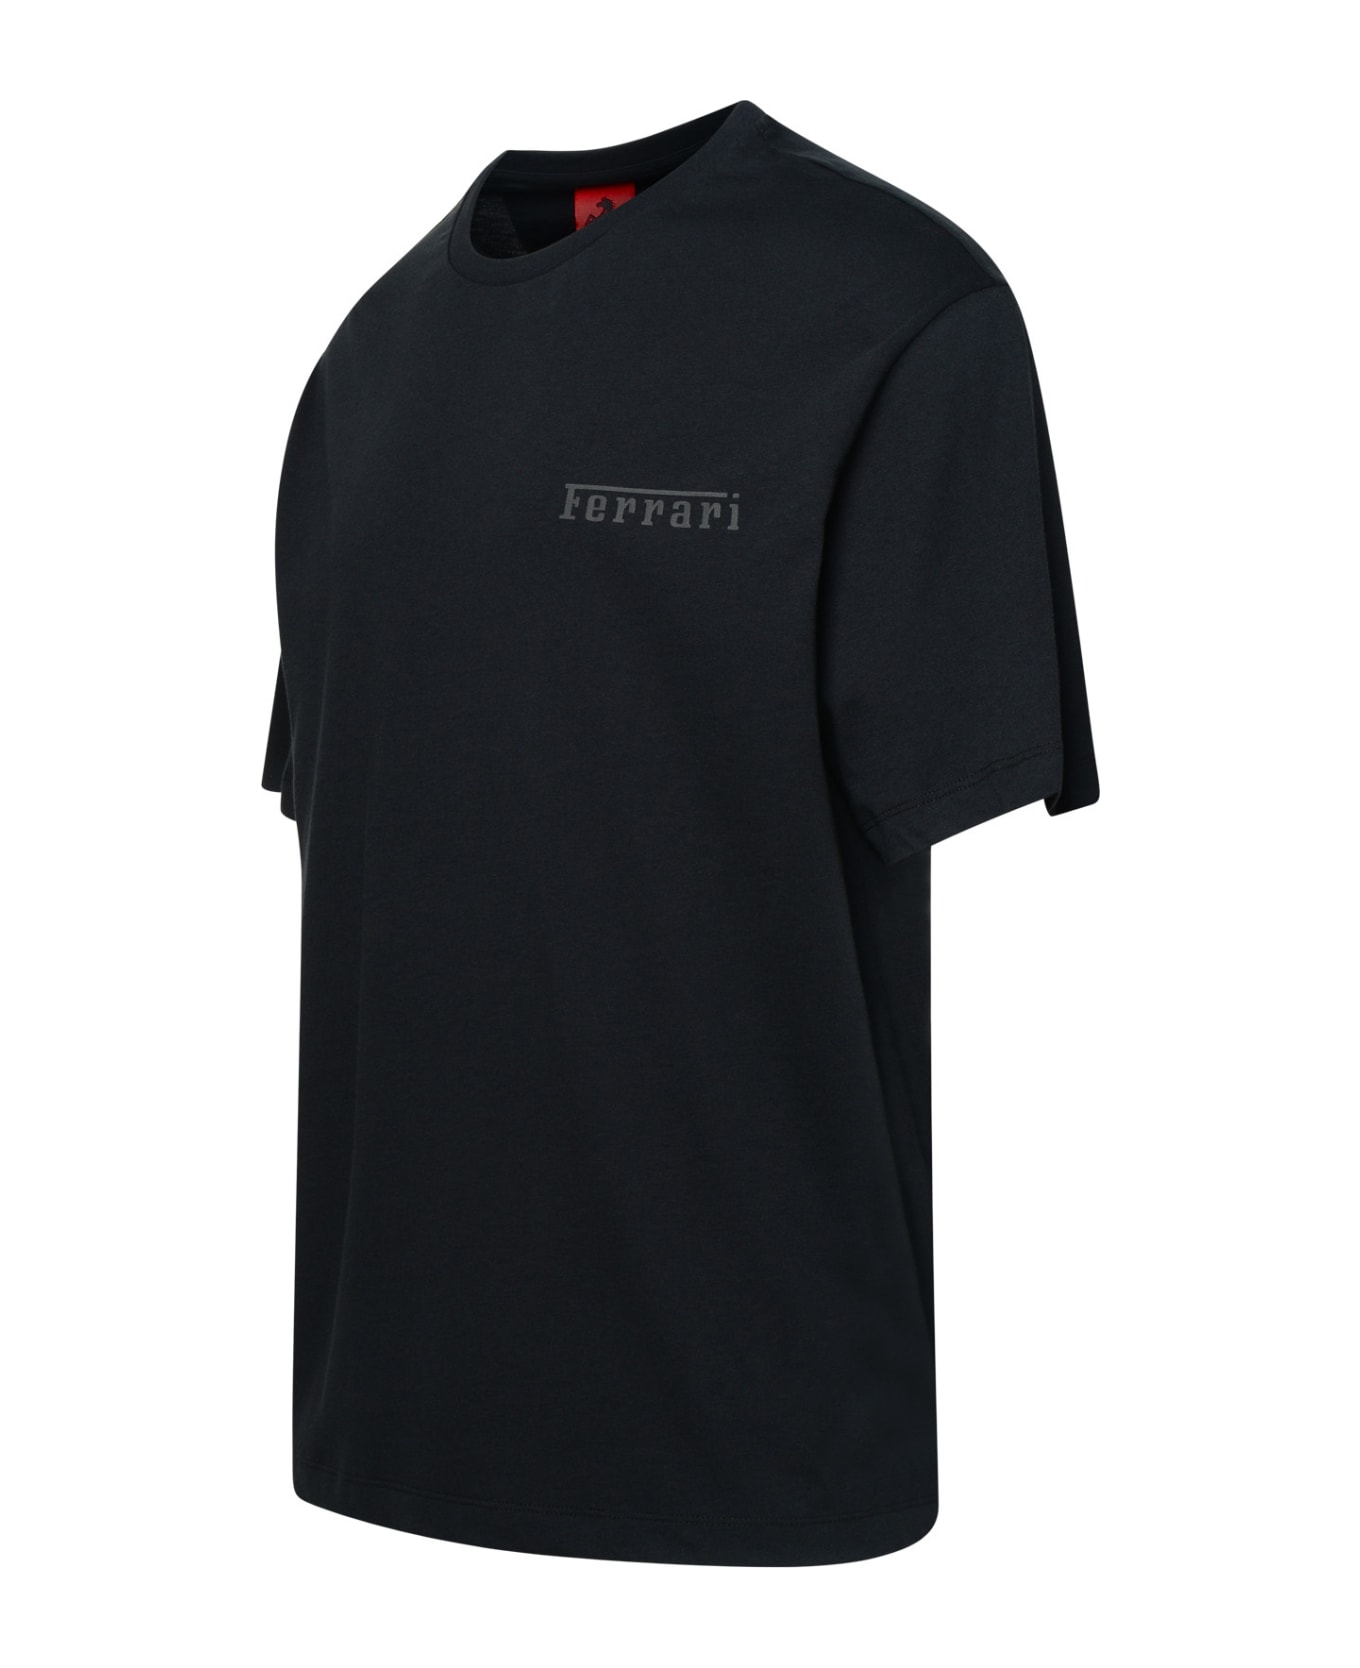 Ferrari Black Cotton T-shirt - BLACK シャツ